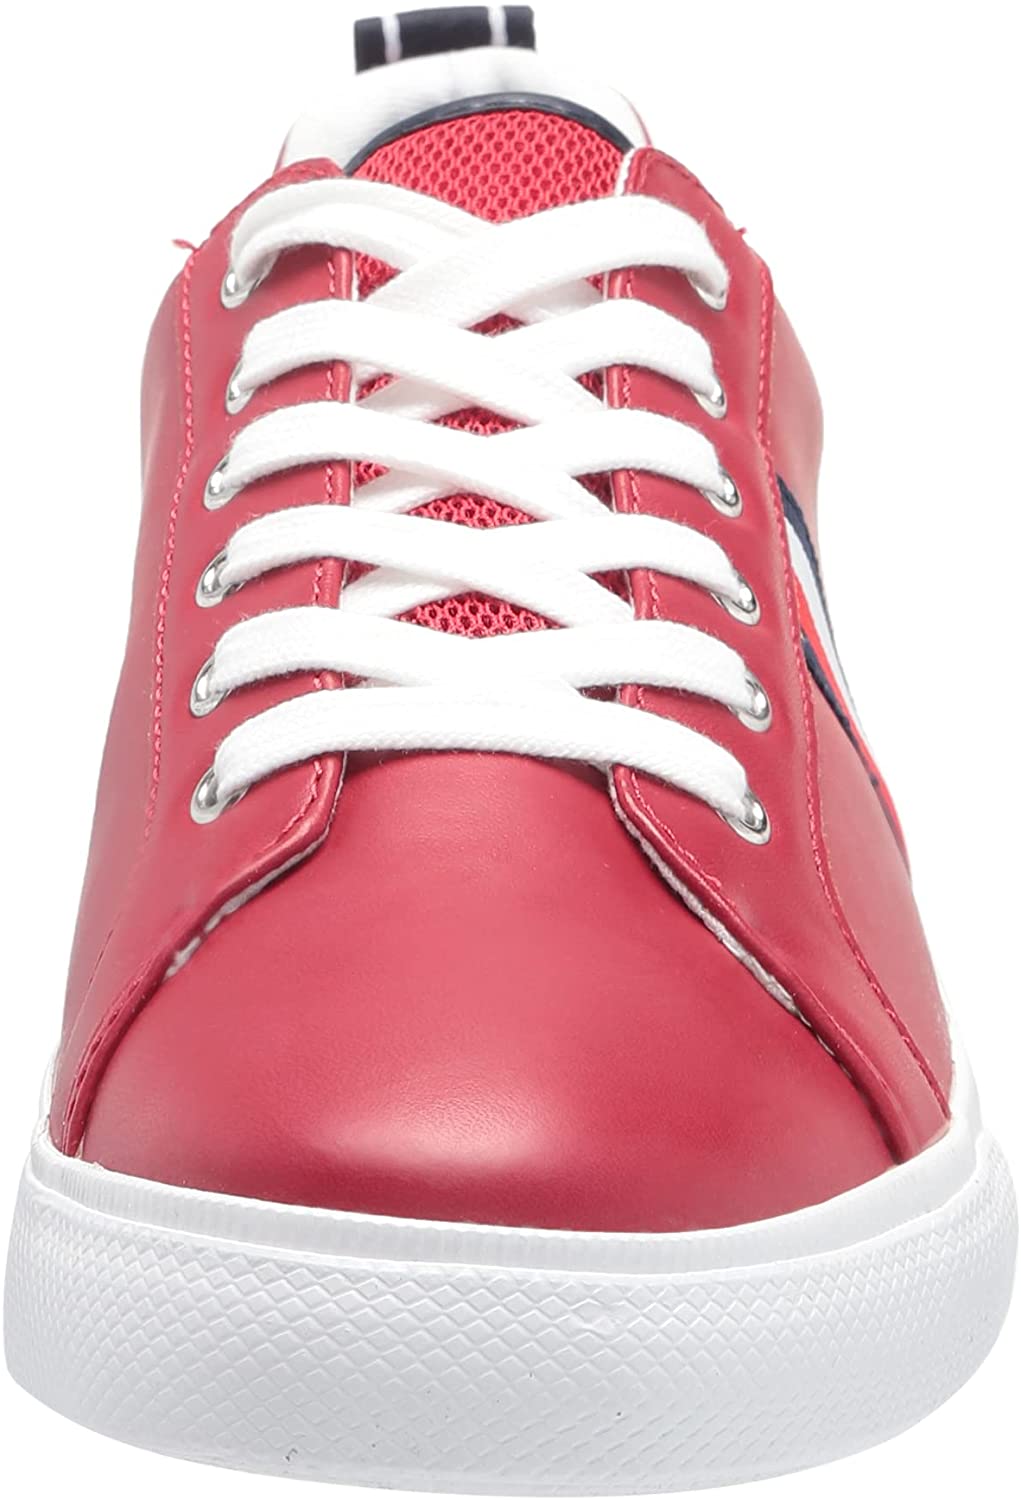 Tommy Hilfiger Landon Women Shoes Sneaker Dark Red (C4) #T011